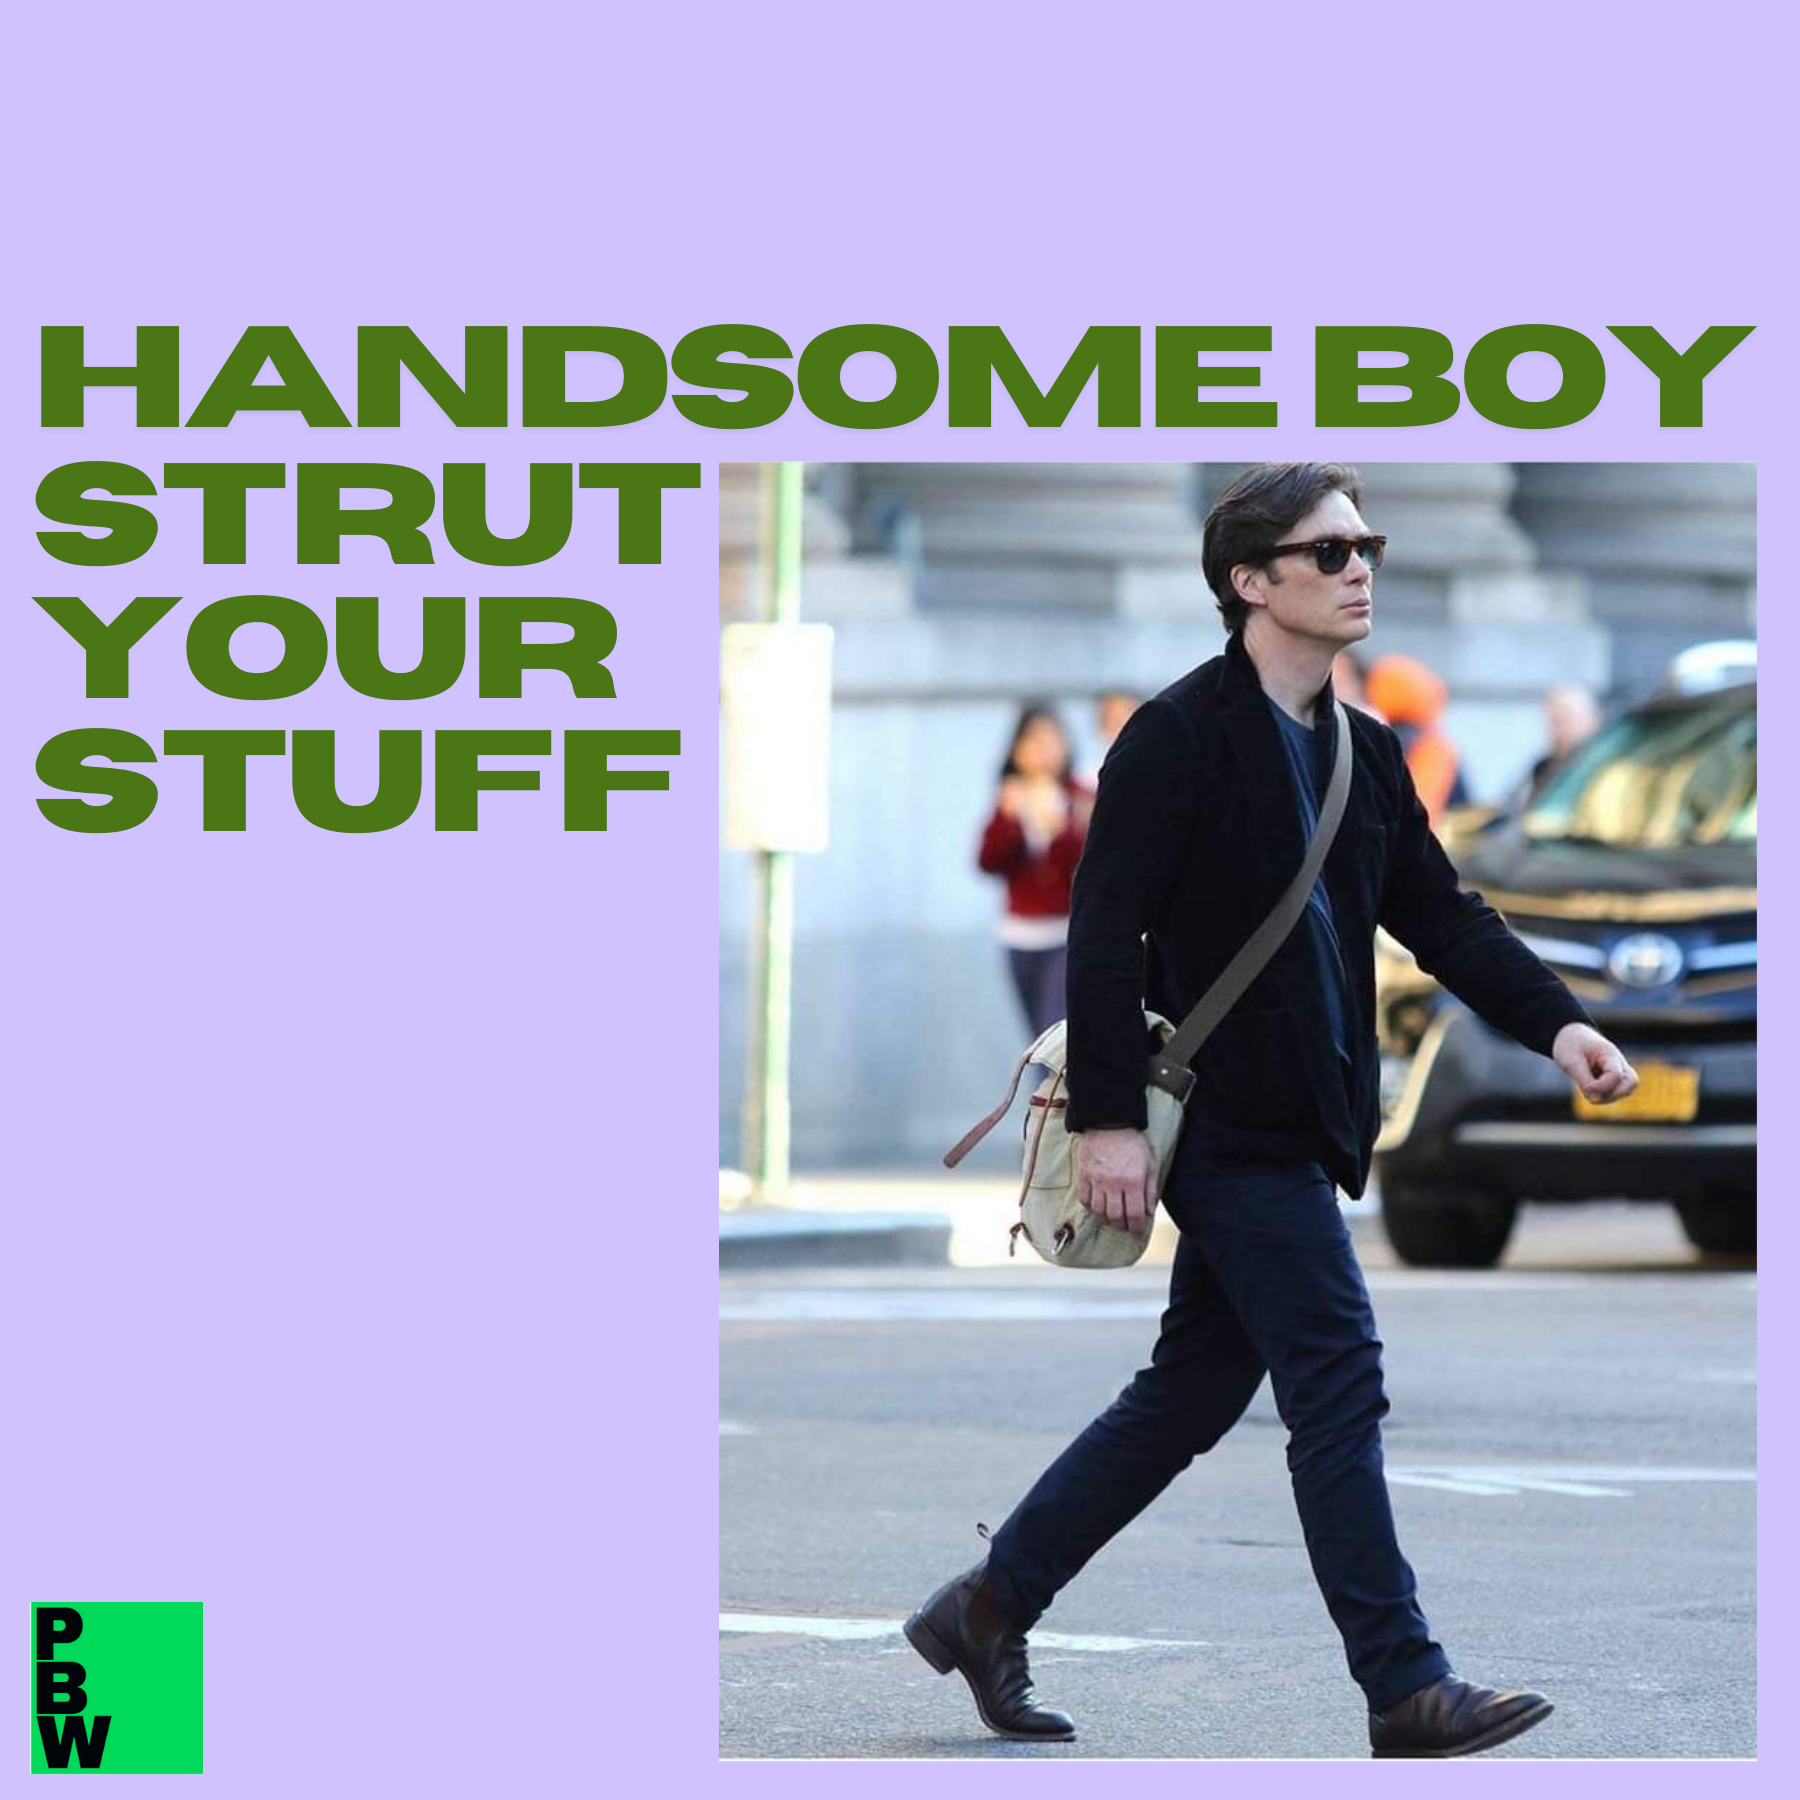 Handsome Boy Strut Your Stuff walking playlist spotify sunny day